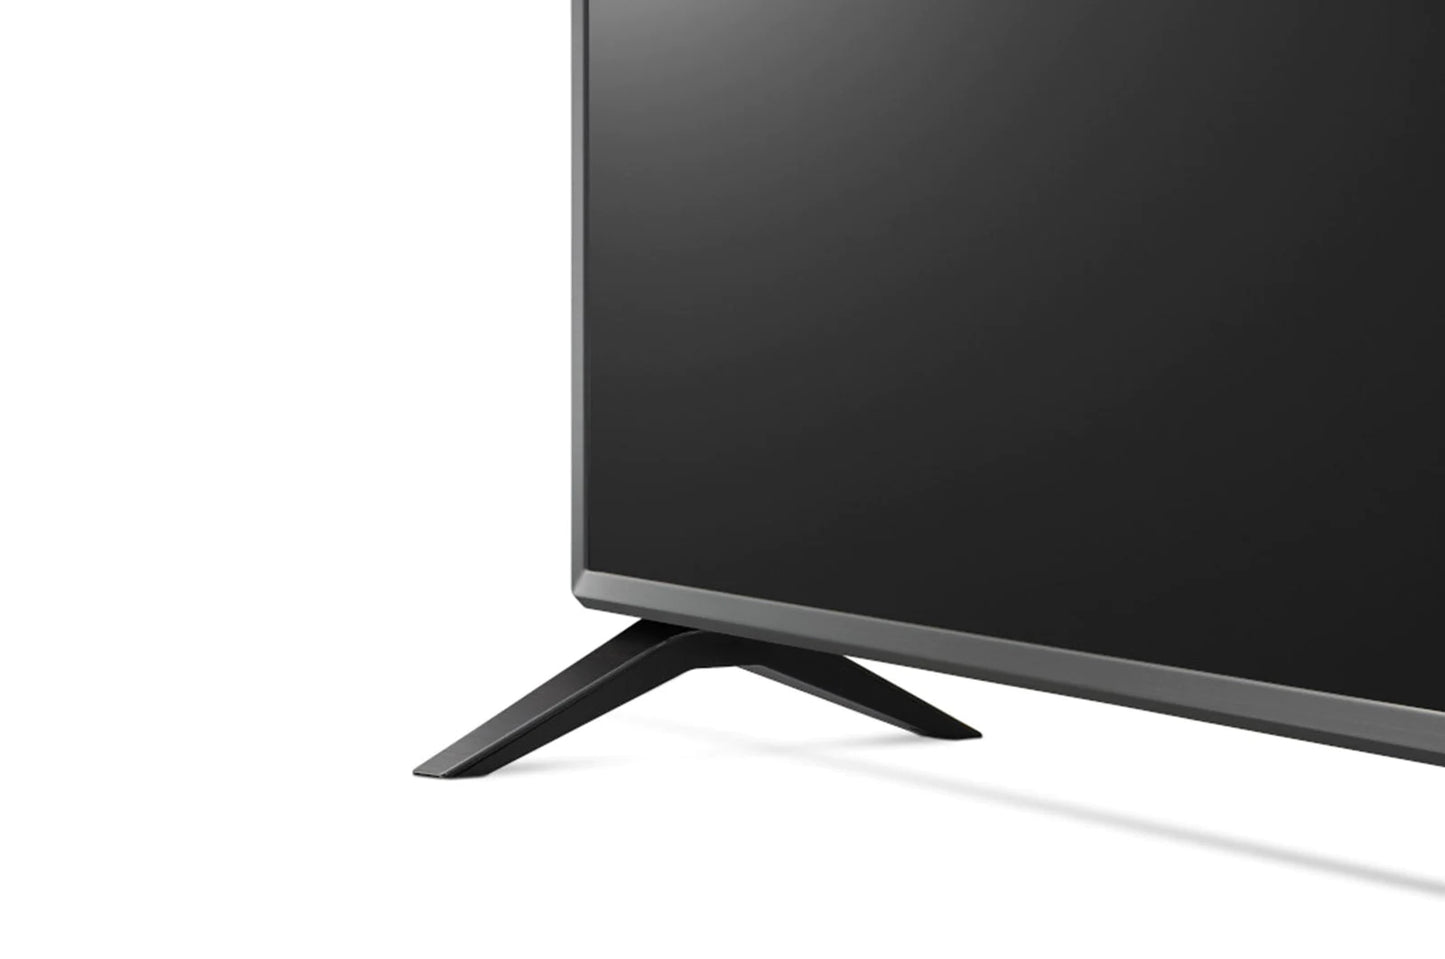 LG 55 inch Smart TV, 55UP7500